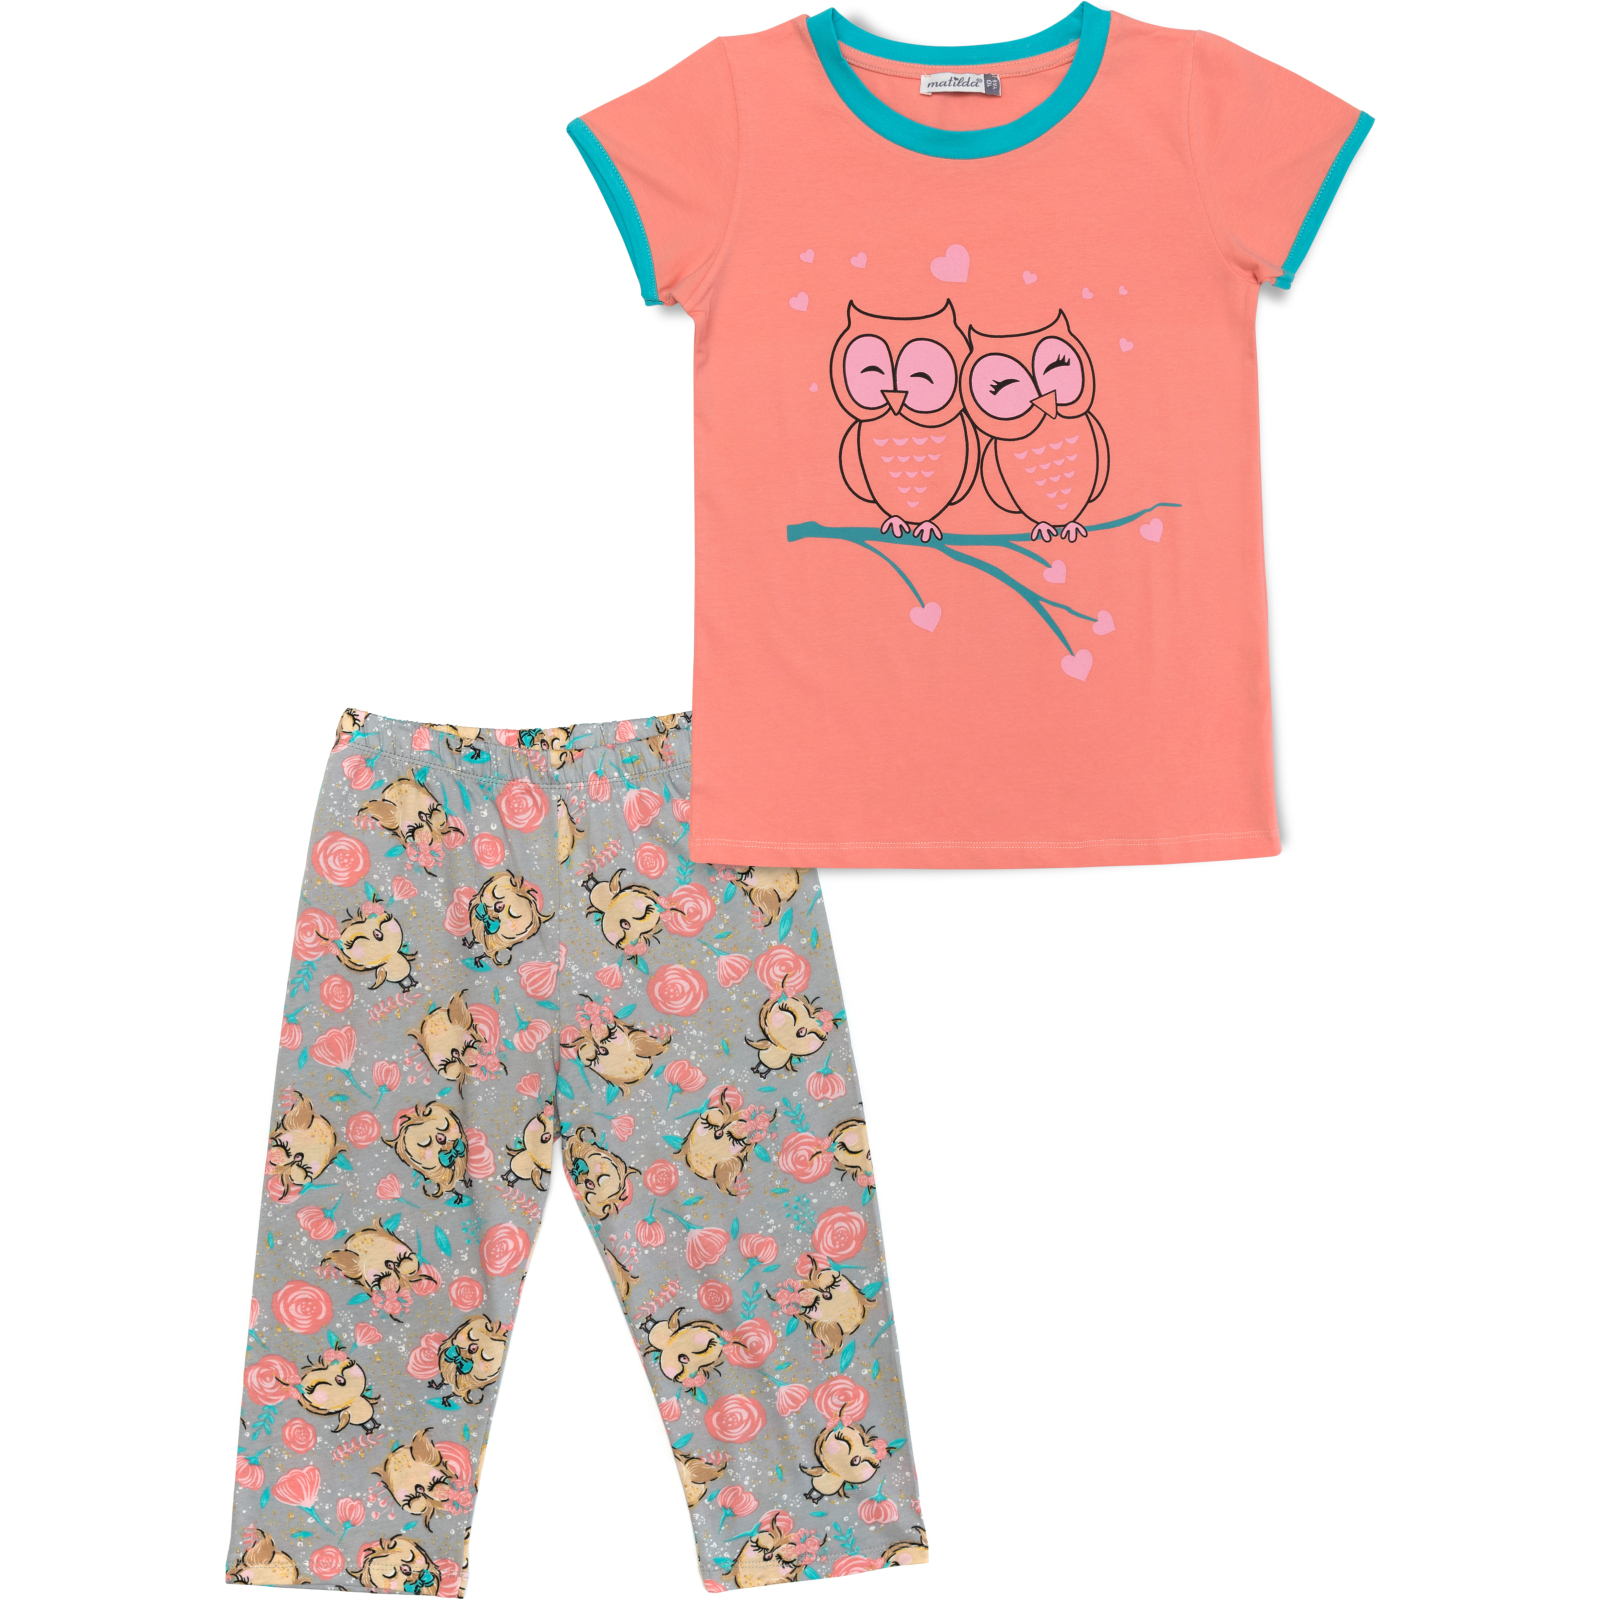 Пижама Matilda с совушками (11590-3-116G-peach)